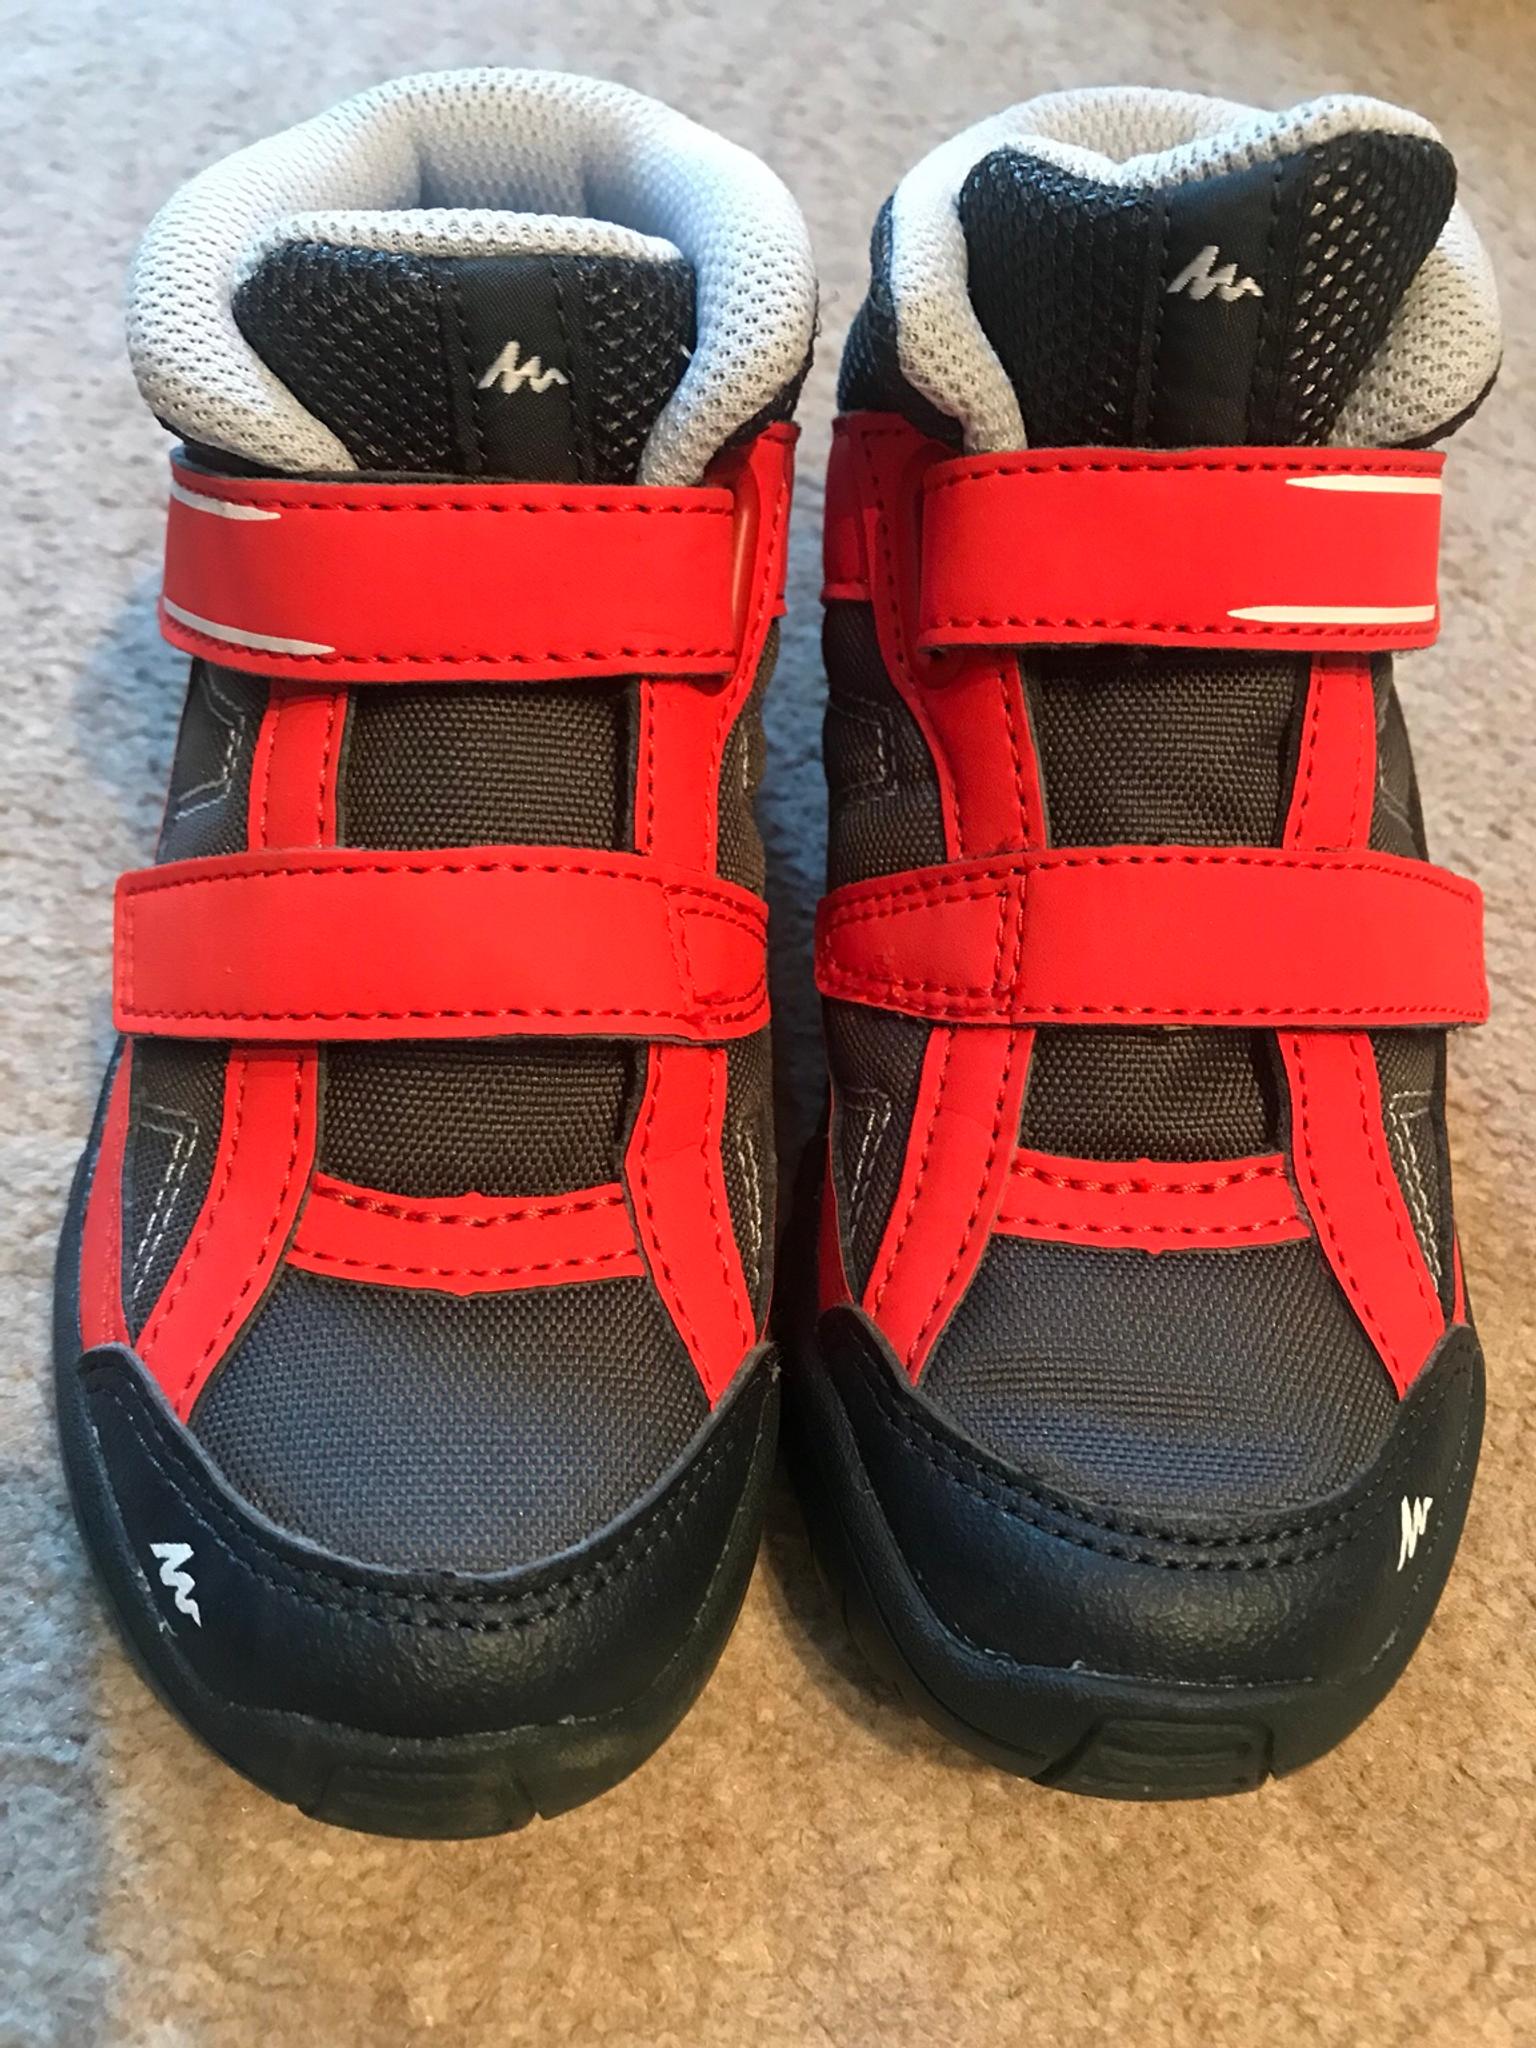 infant walking boots